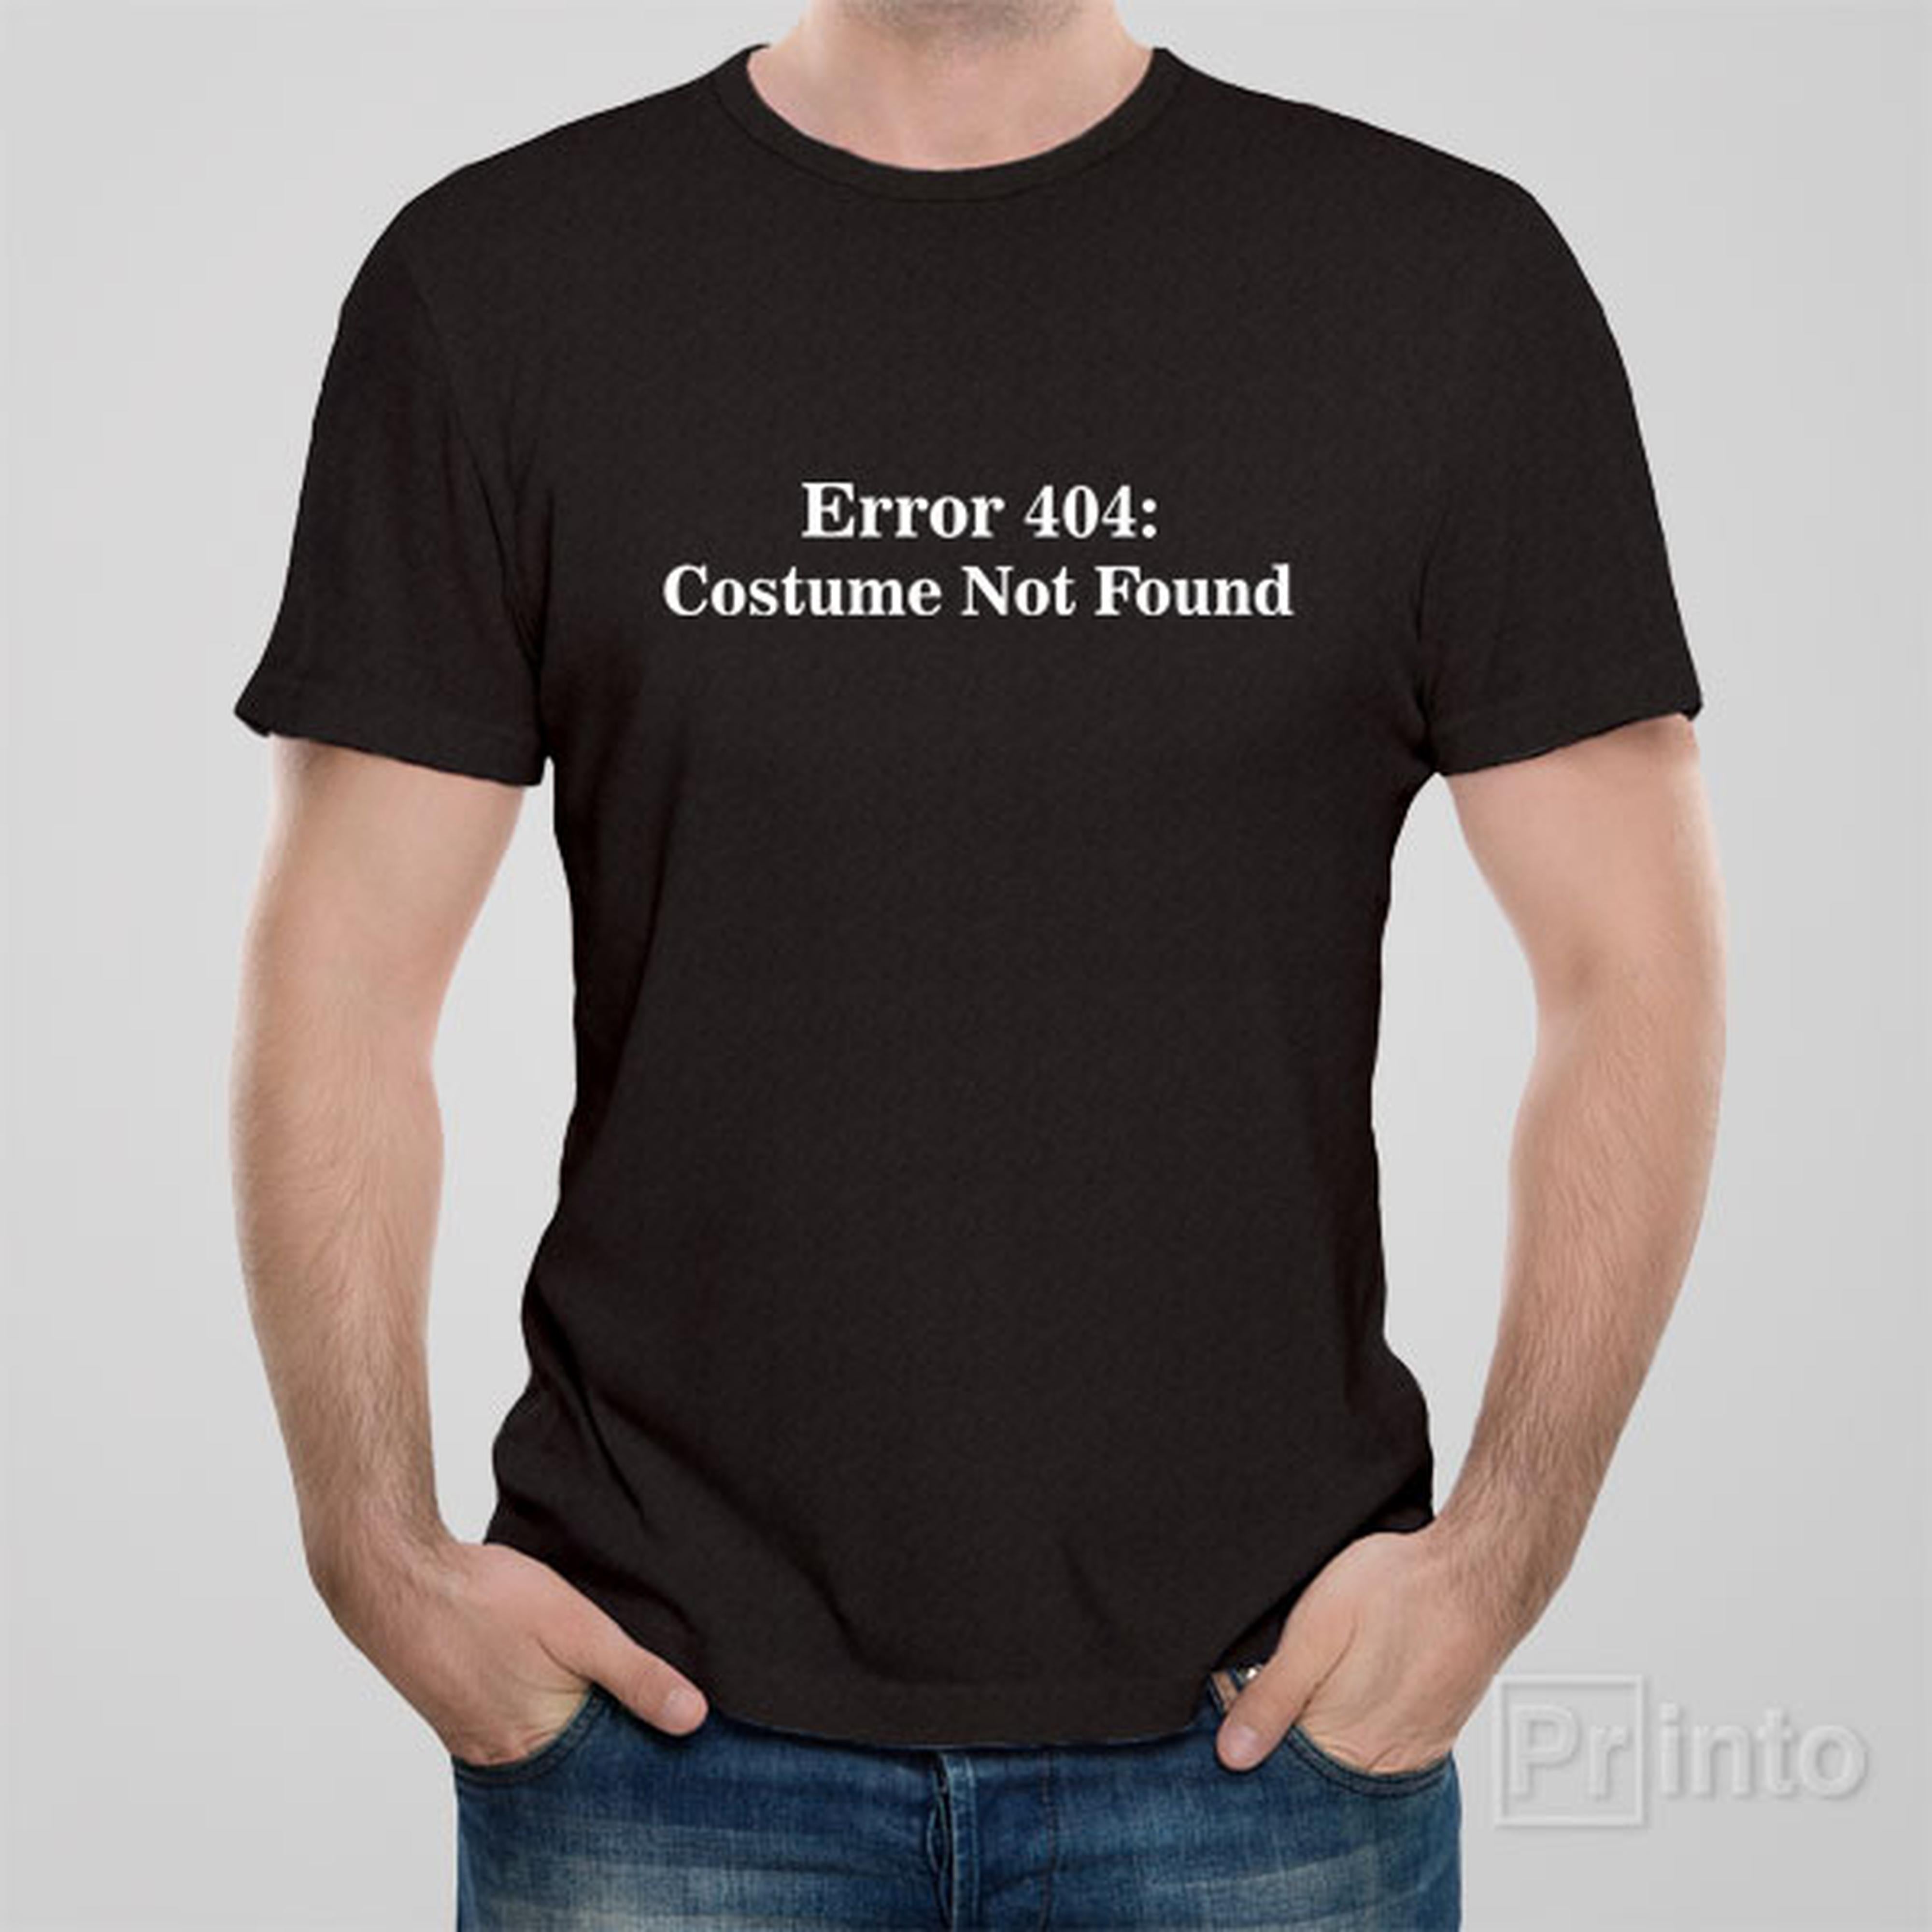 Dont found. I blame Society футболка. Life pub футболка. T Shirt 404 Error.